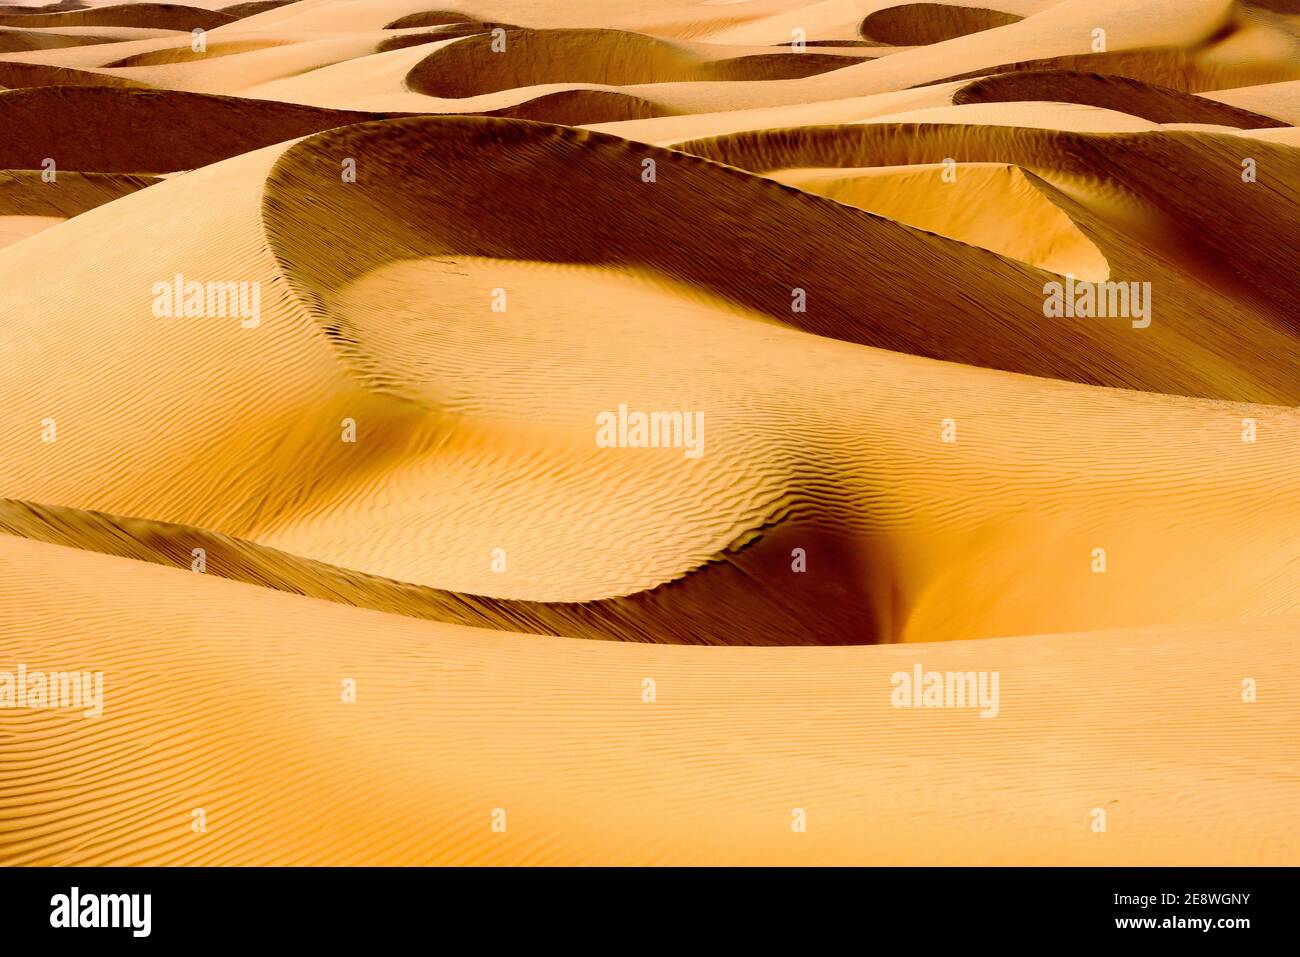 Sand dunes in Wahiba desert, Sultanate of Oman. Stock Photo